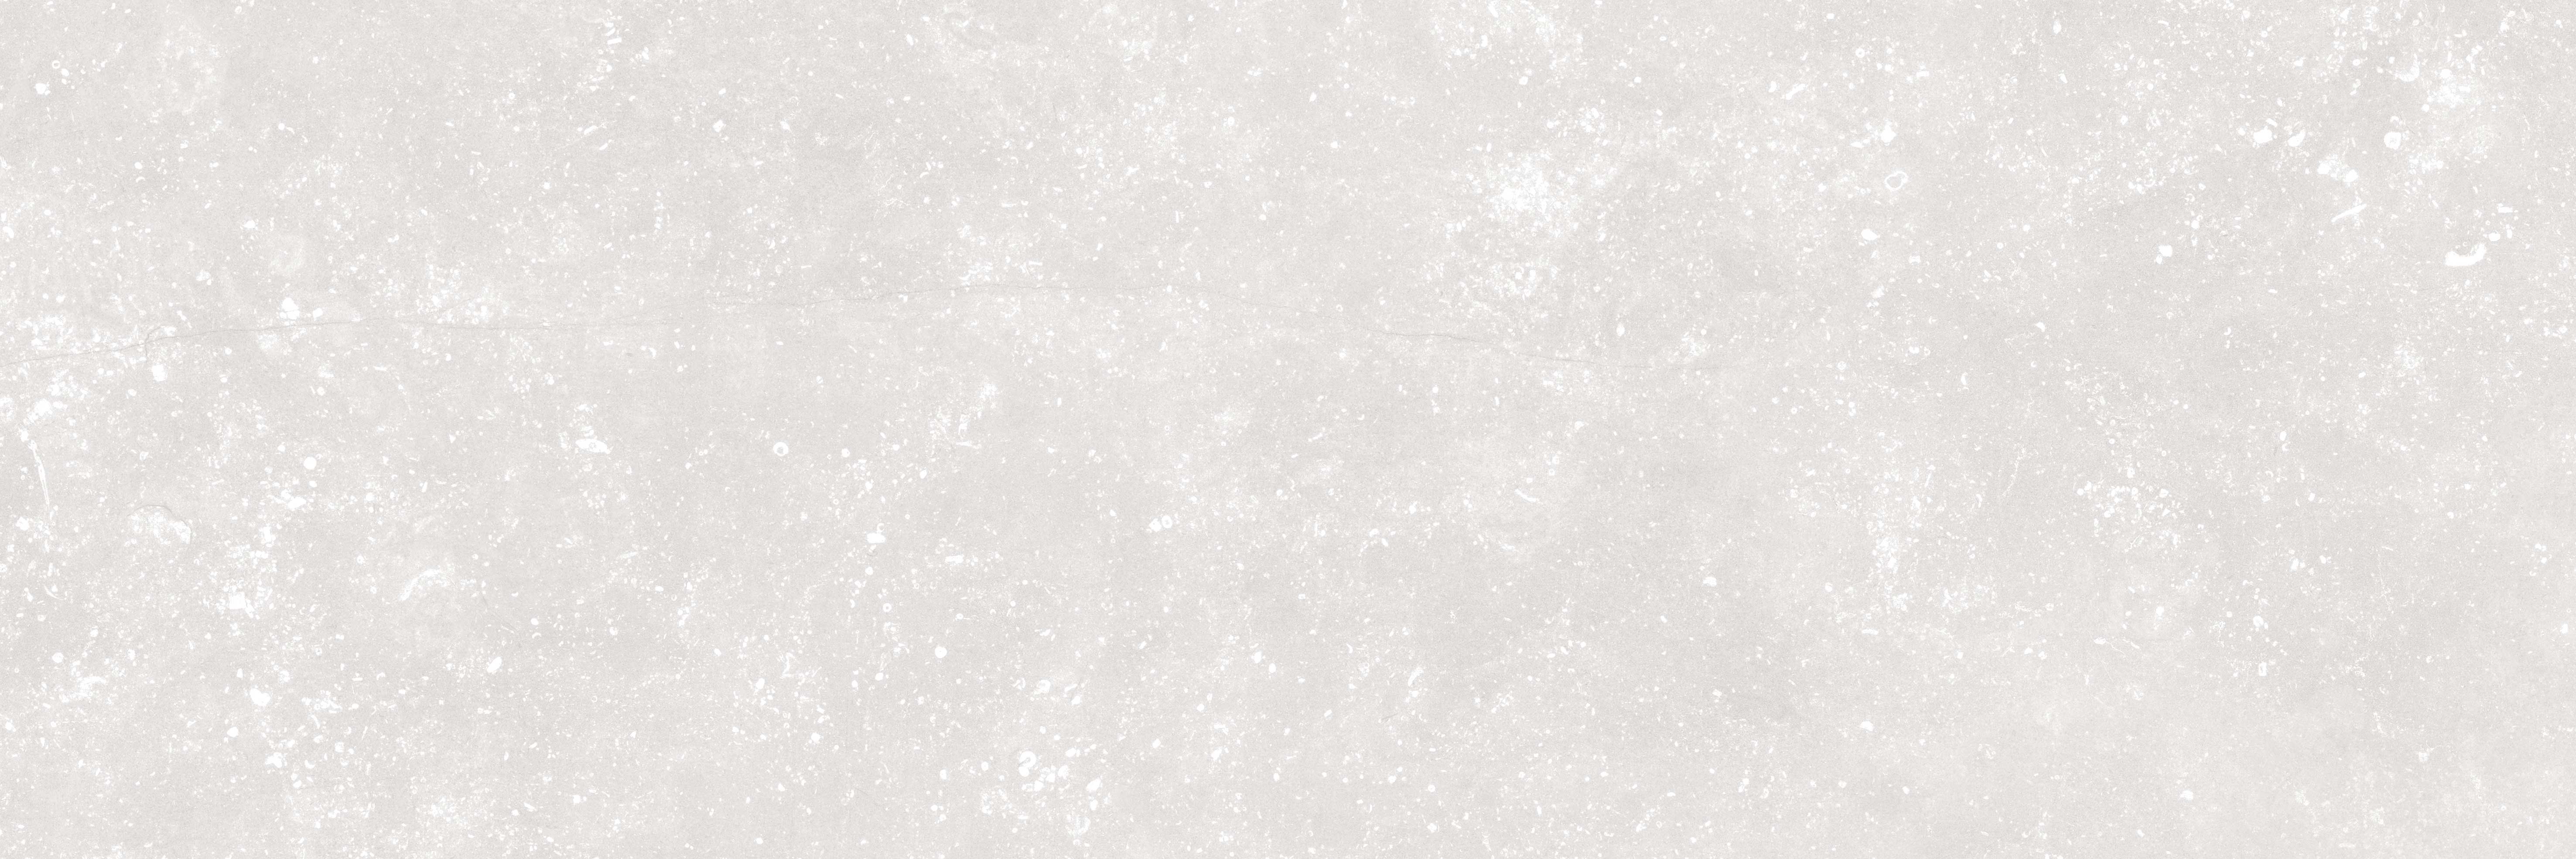 Steinoptik Wand Blanc 25x75 cm